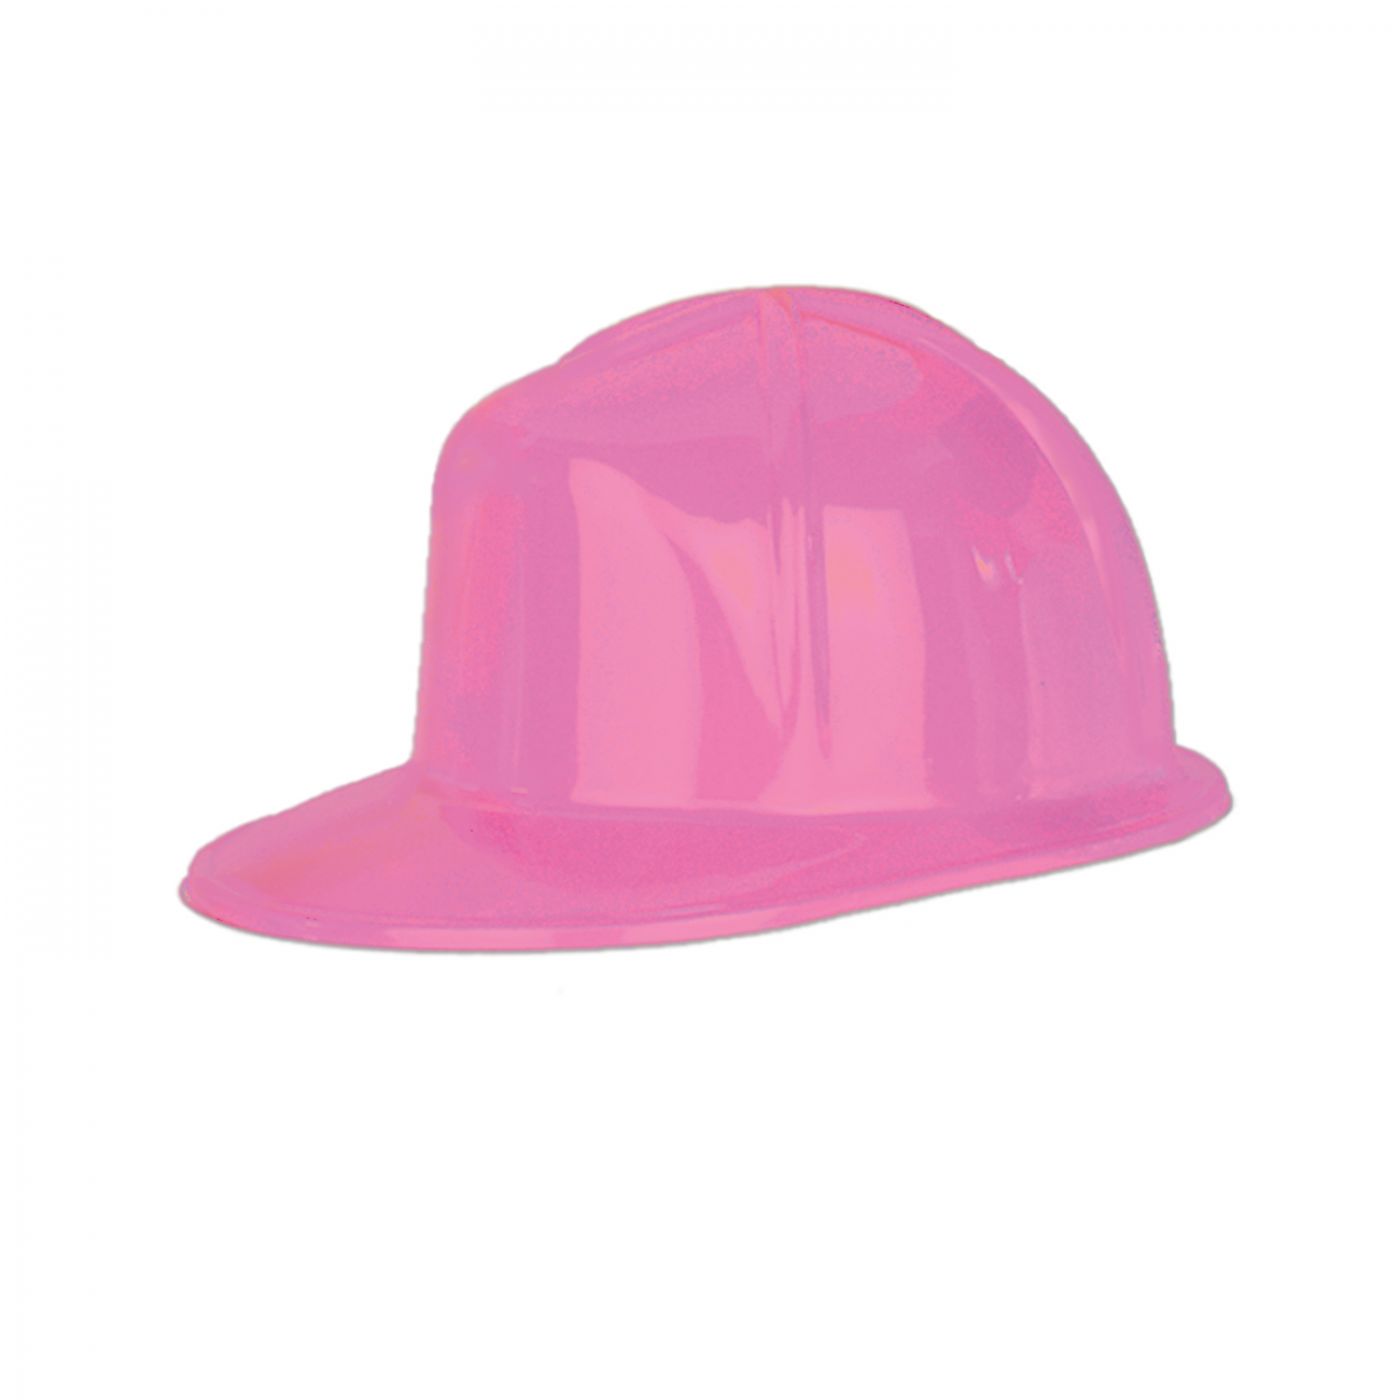 Pink Plastic Construction Helmet (48) image